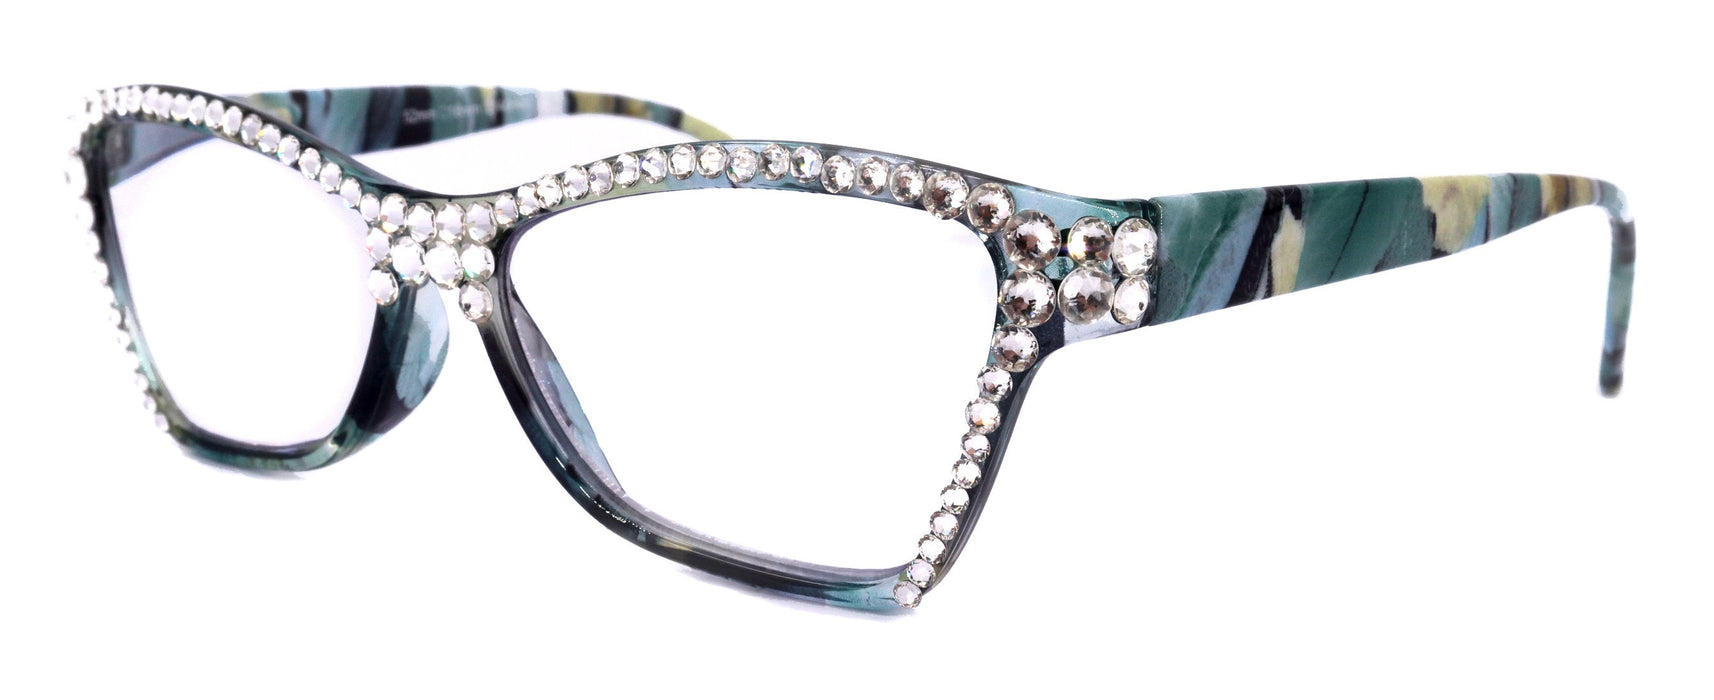 Avian, (Bling) Women Reading Glasses w (Full TOP) (Clear) Genuine European Crystals, Magnifying Cat Eye (Aqua Blue, Green) NY Fifth Avenue.